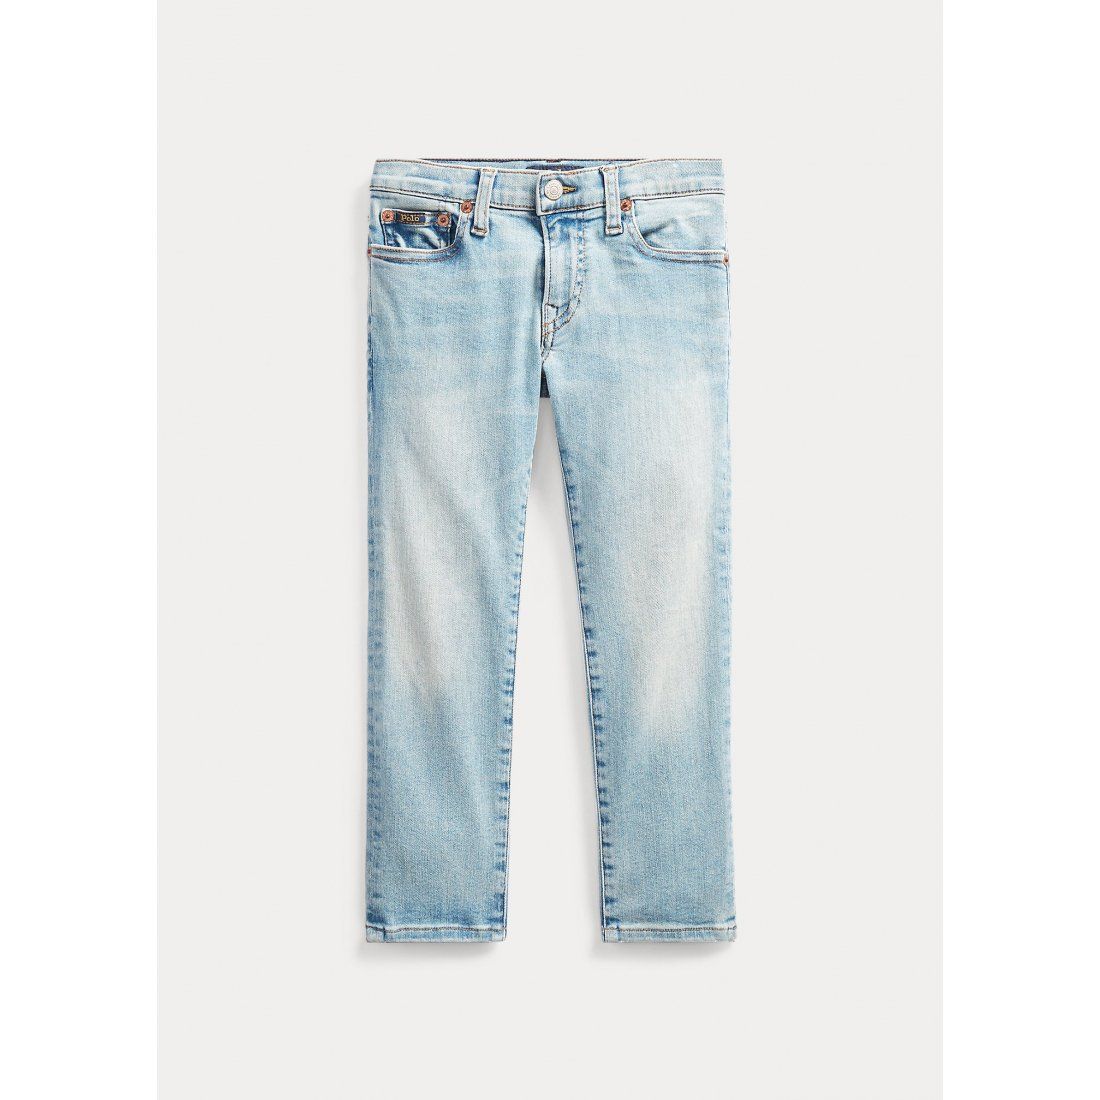 Ralph Lauren - Jeans skinny 'Eldridge Stretch' pour Petits garçons